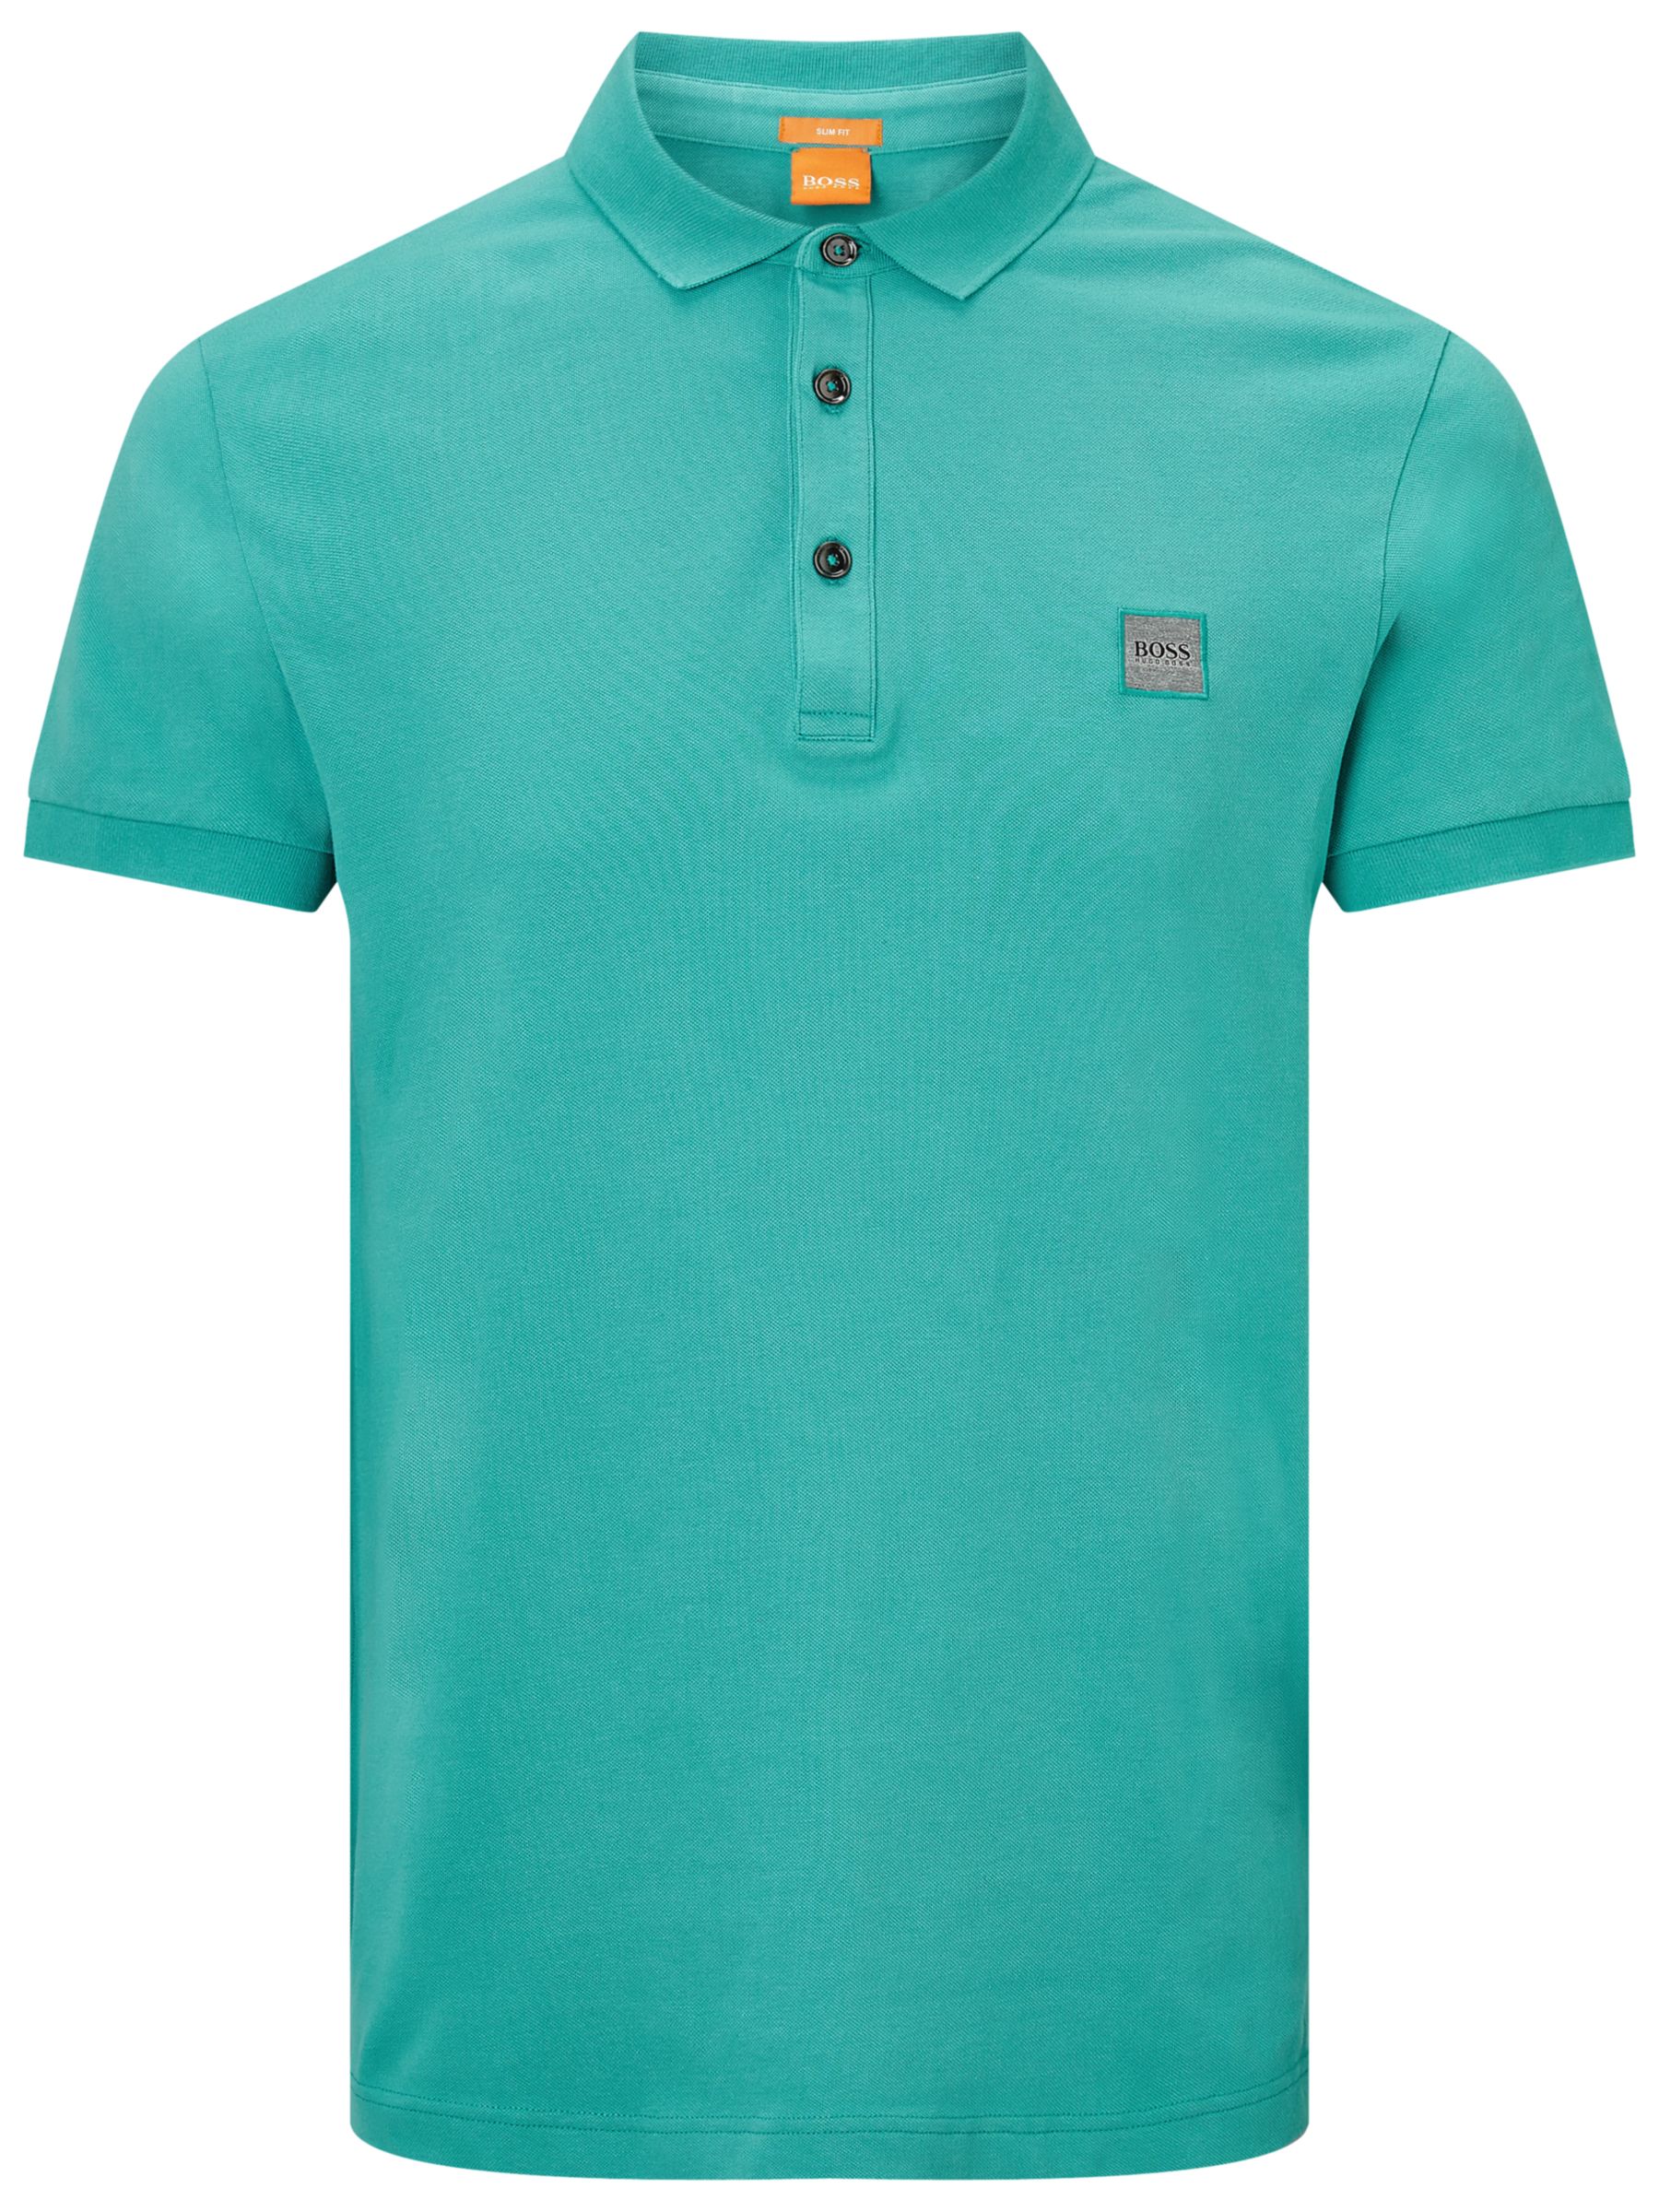 BOSS Orange Pavlik Slim Fit Polo Shirt, Turquoise/Aqua, XXL